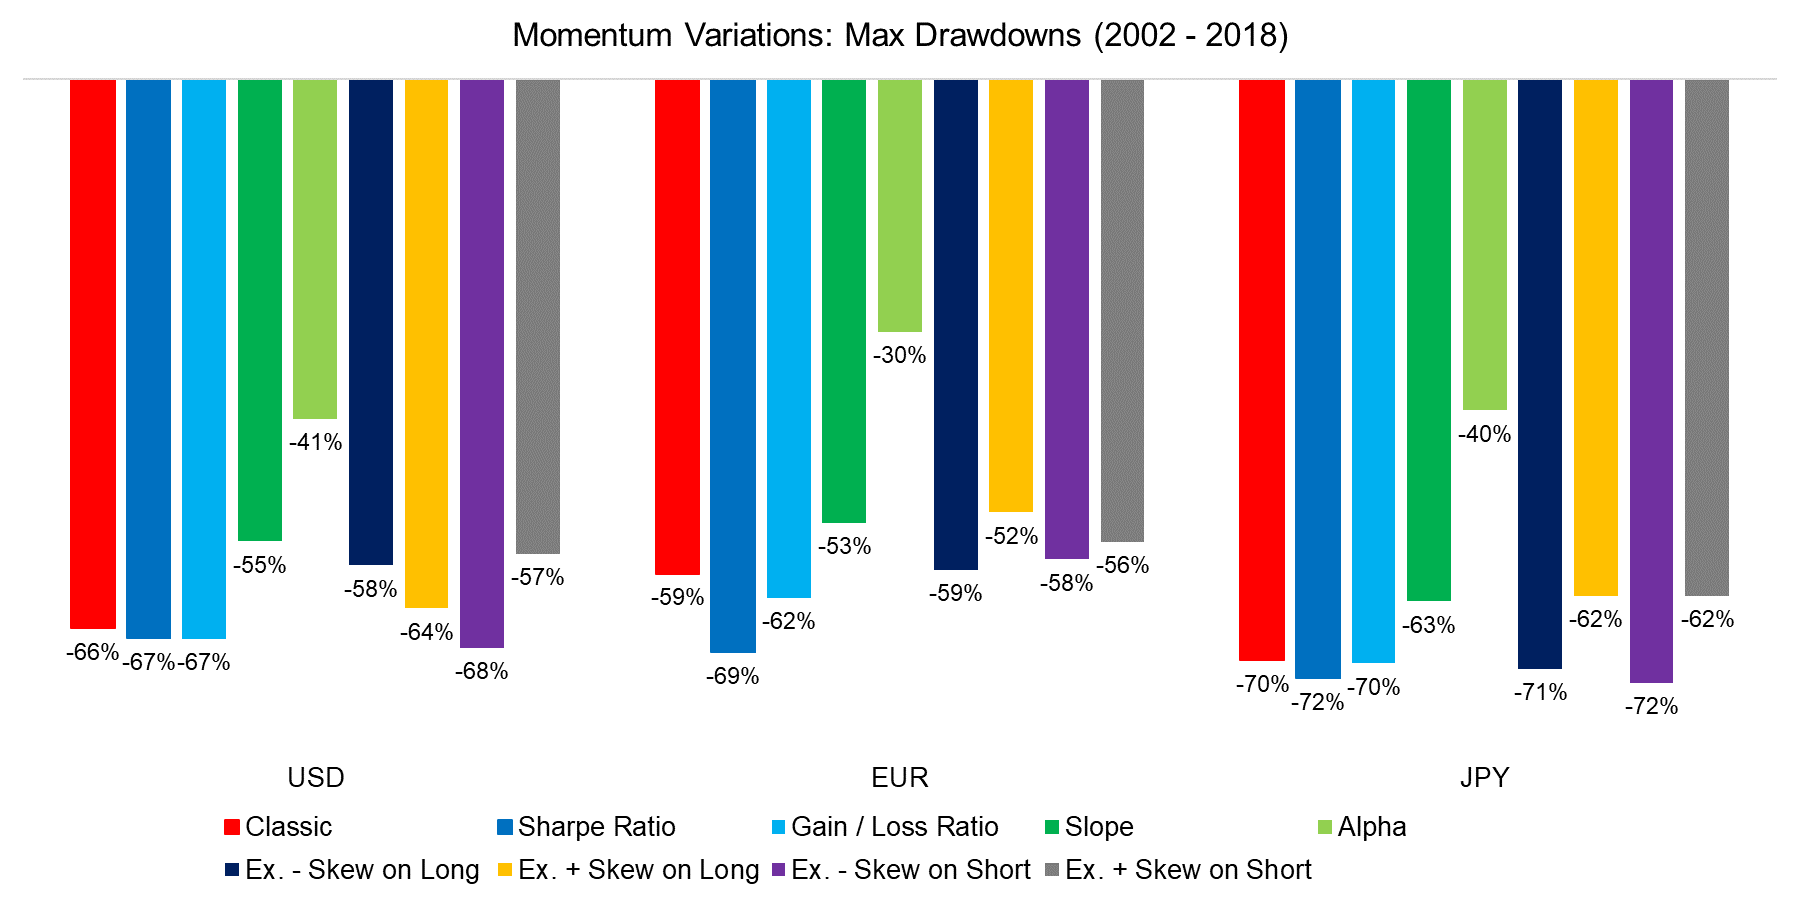 Momentum Variations Max Drawdowns (2002 - 2018)